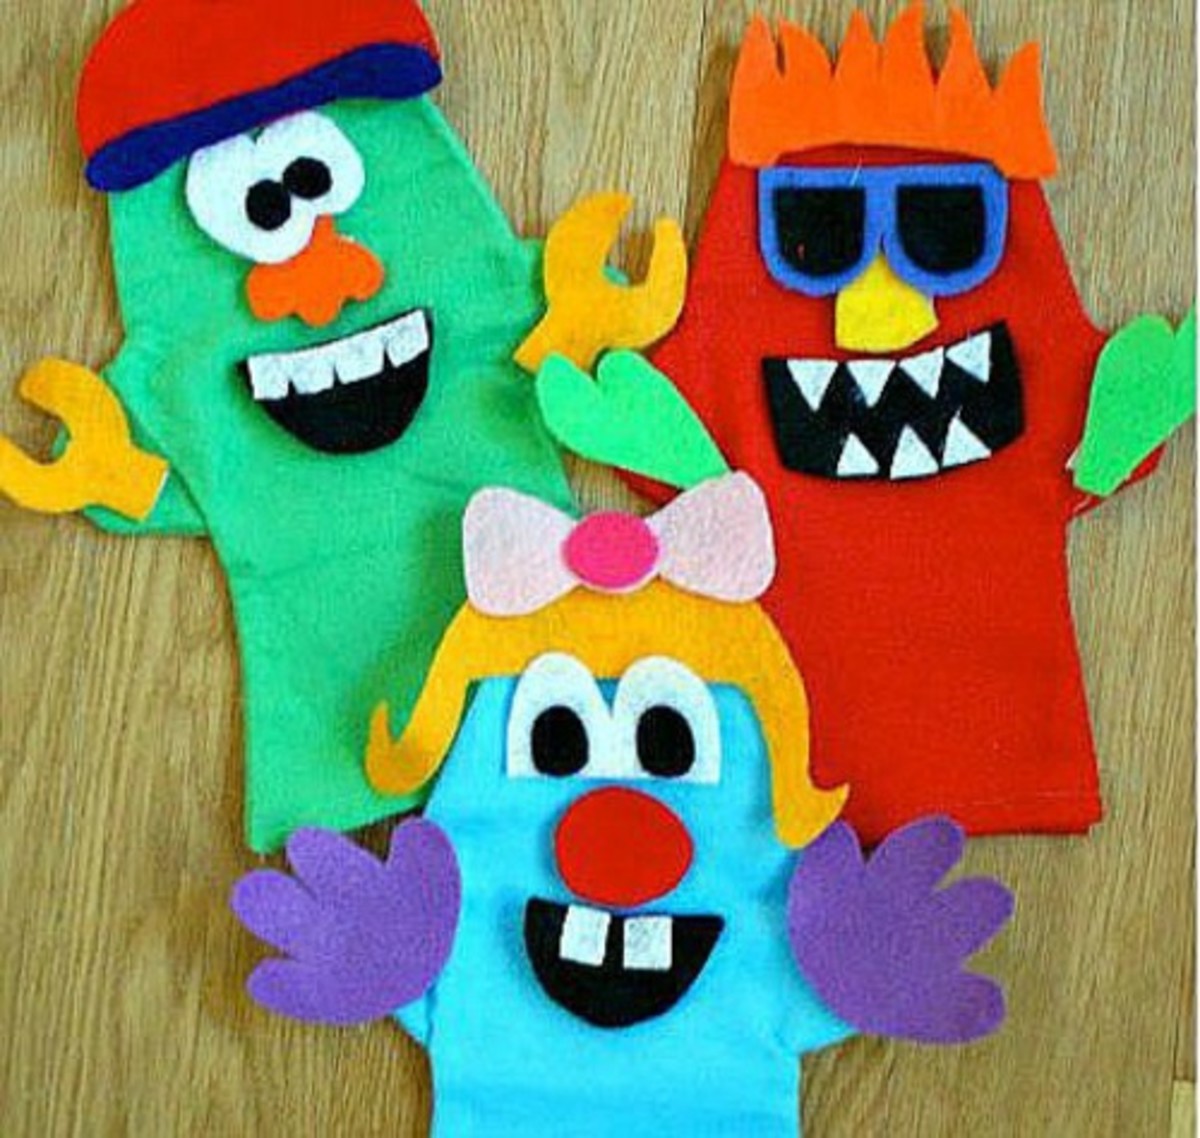 fun-puppet-making-ideas-for-kids